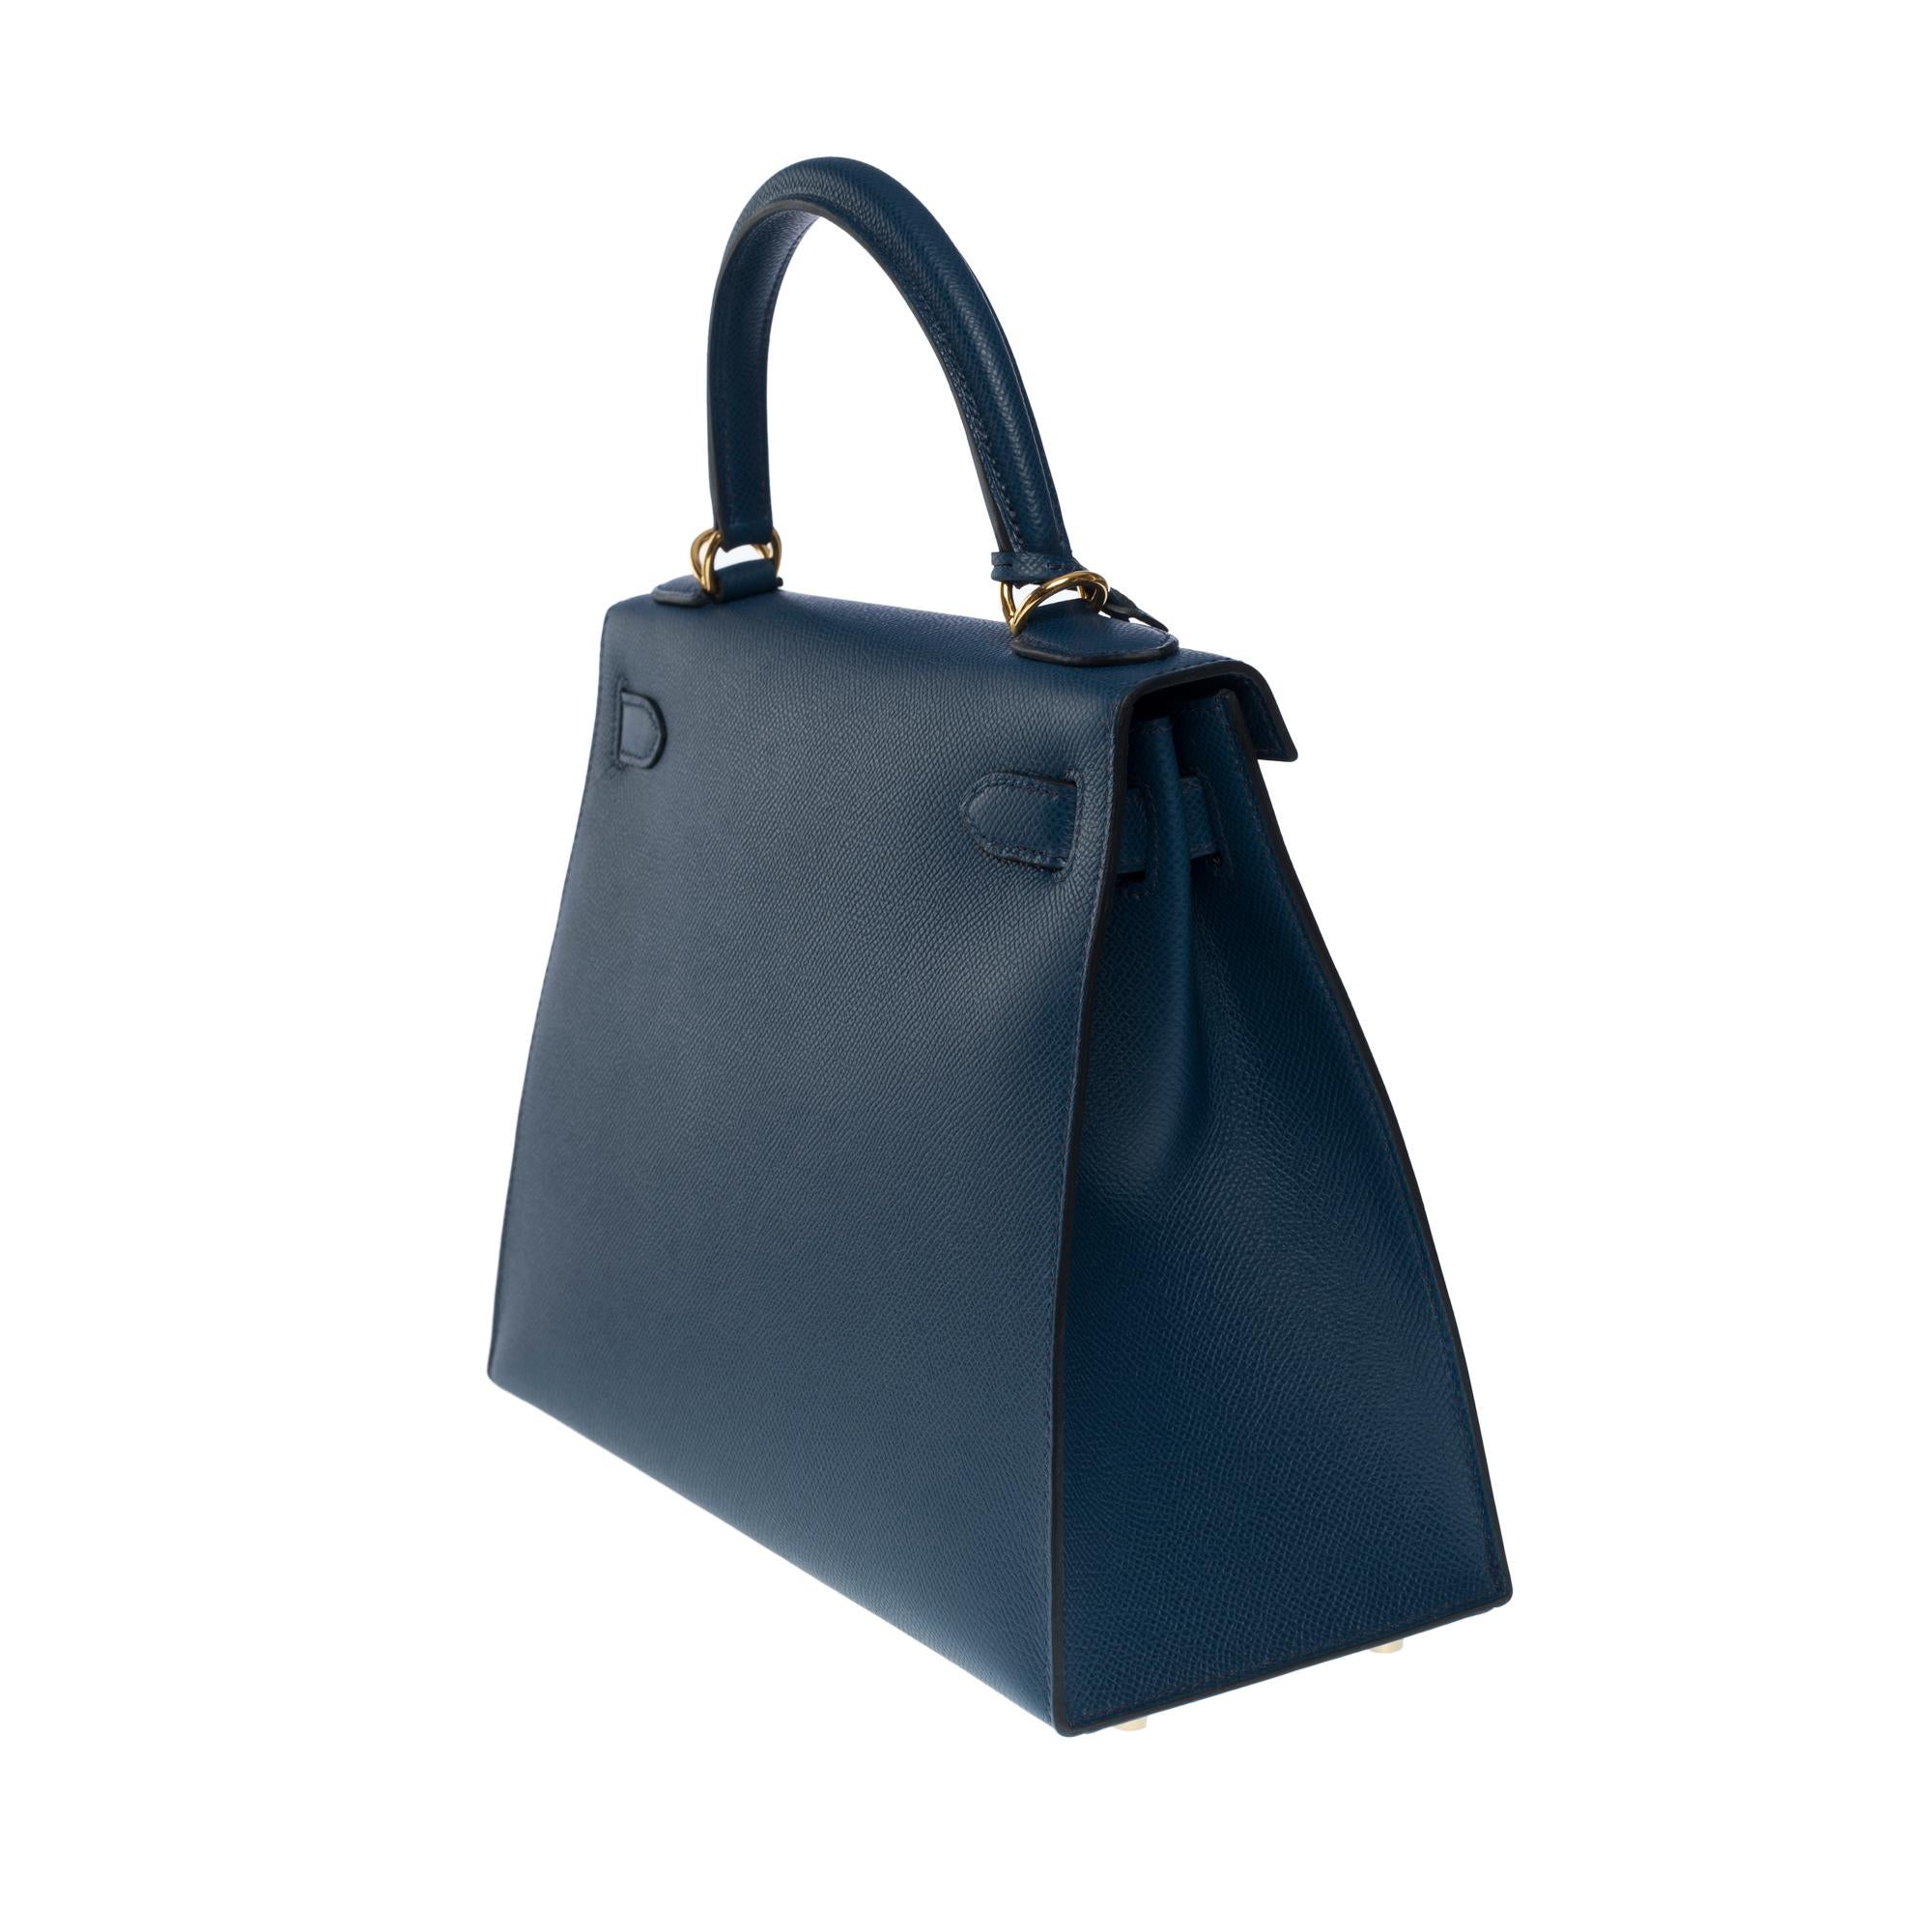 New Hermès Kelly 28 sellier handbag strap in Prussian blue Epsom leather, GHW 1